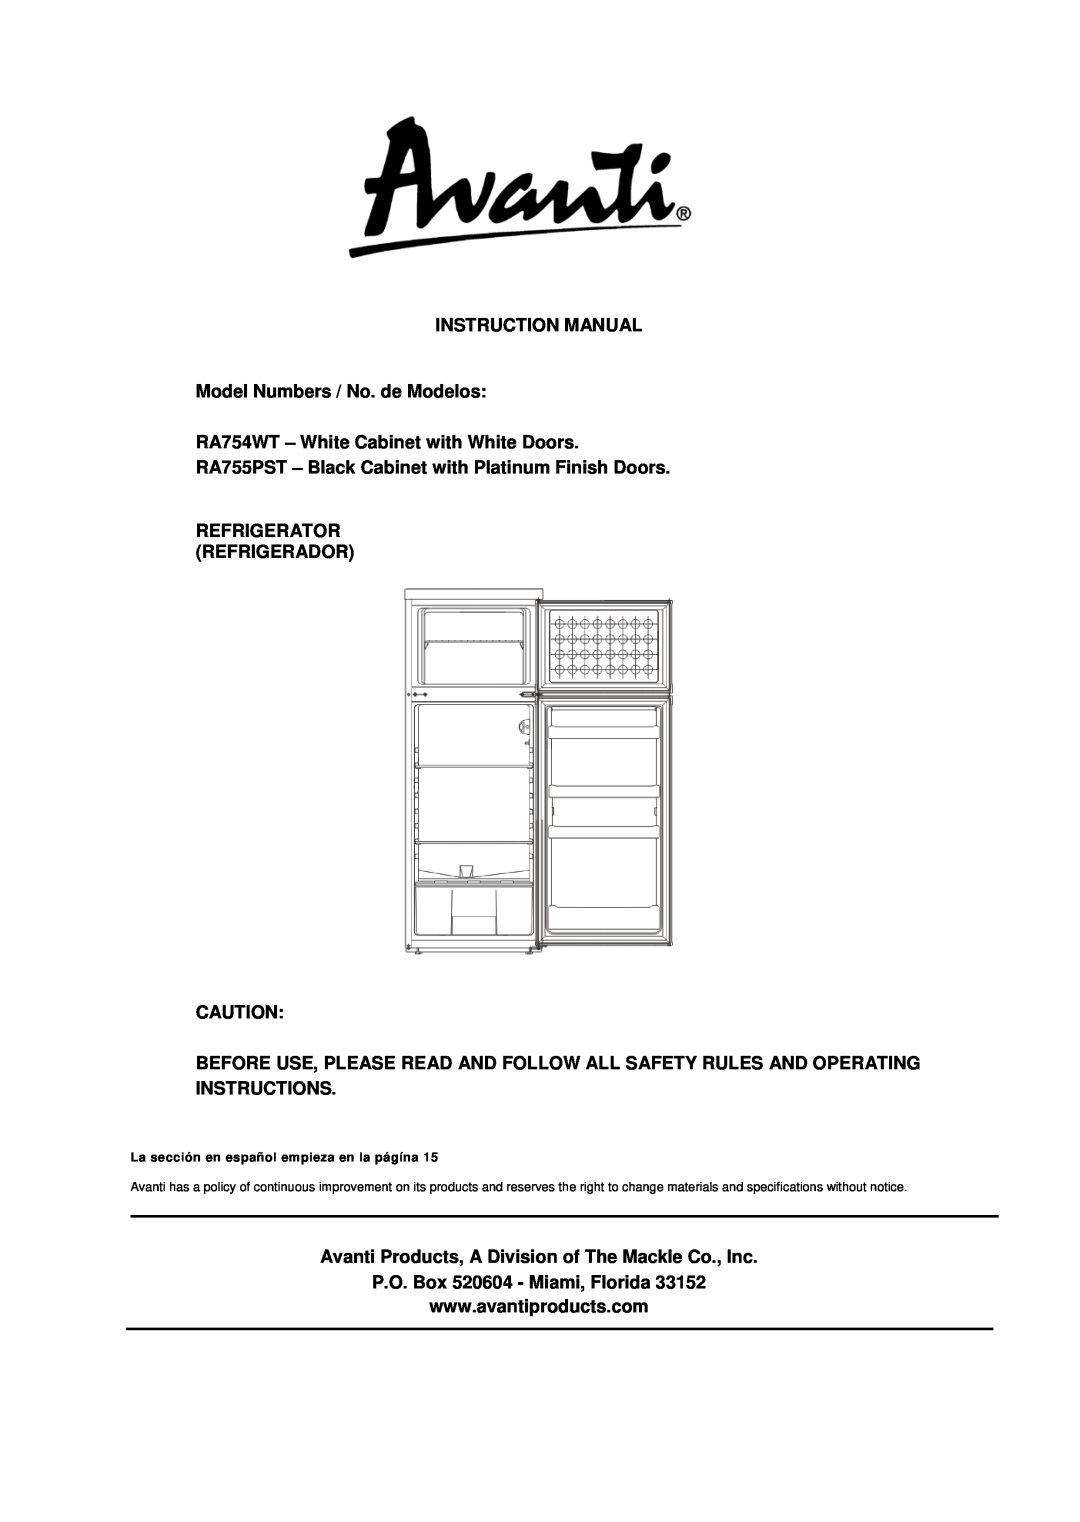 Avanti RA755PST instruction manual RA754WT - White Cabinet with White Doors, Refrigerator Refrigerador 